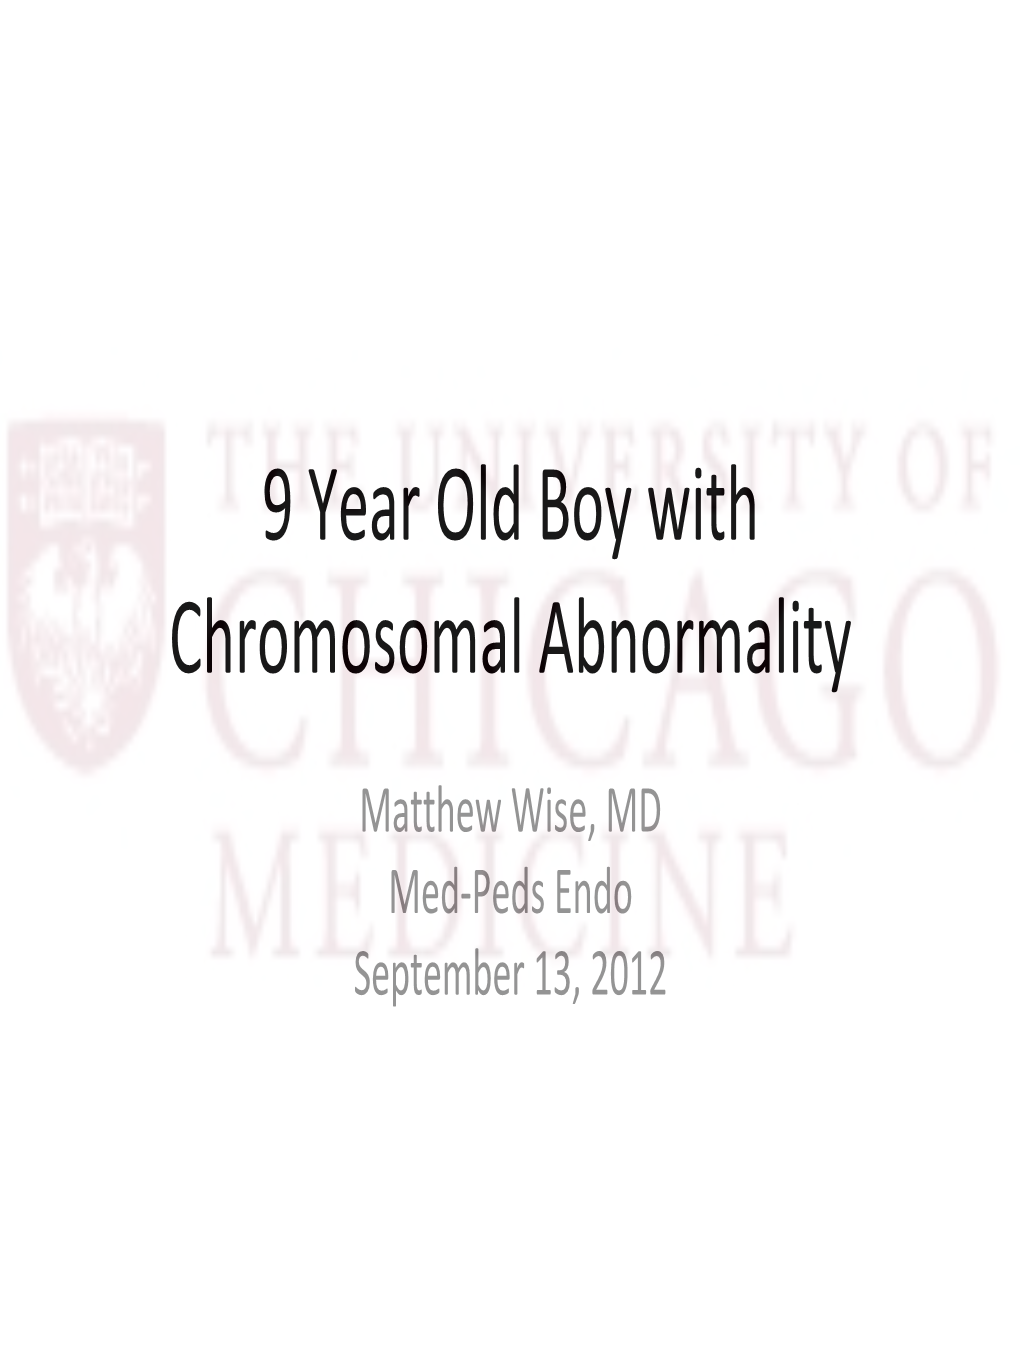 9 Year Old Boy with Chromosomal Abnormality